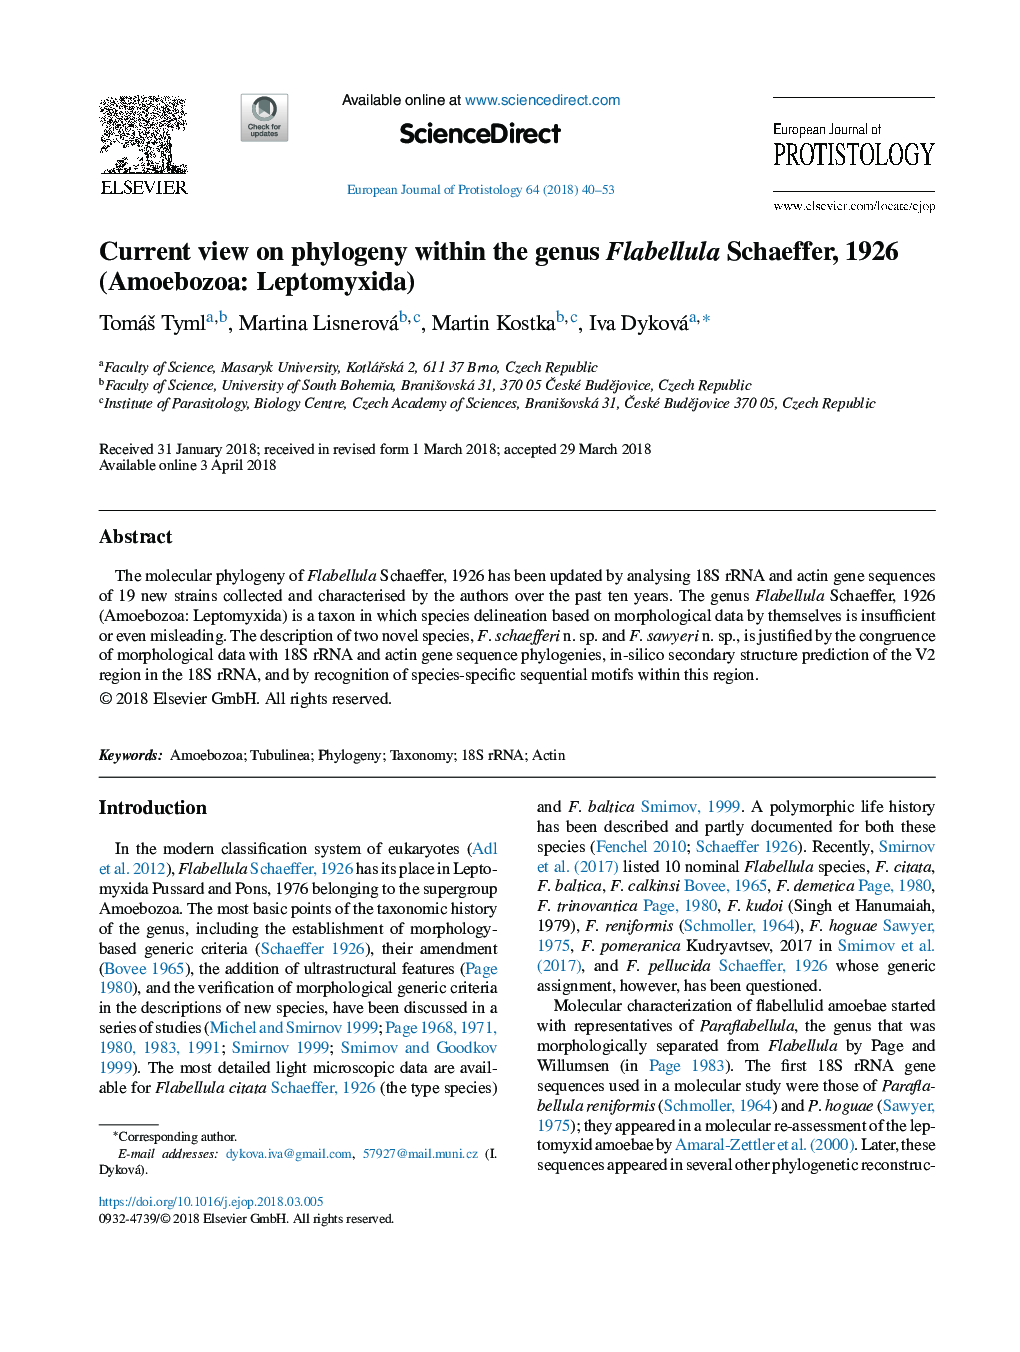 Current view on phylogeny within the genus Flabellula Schaeffer, 1926 (Amoebozoa: Leptomyxida)